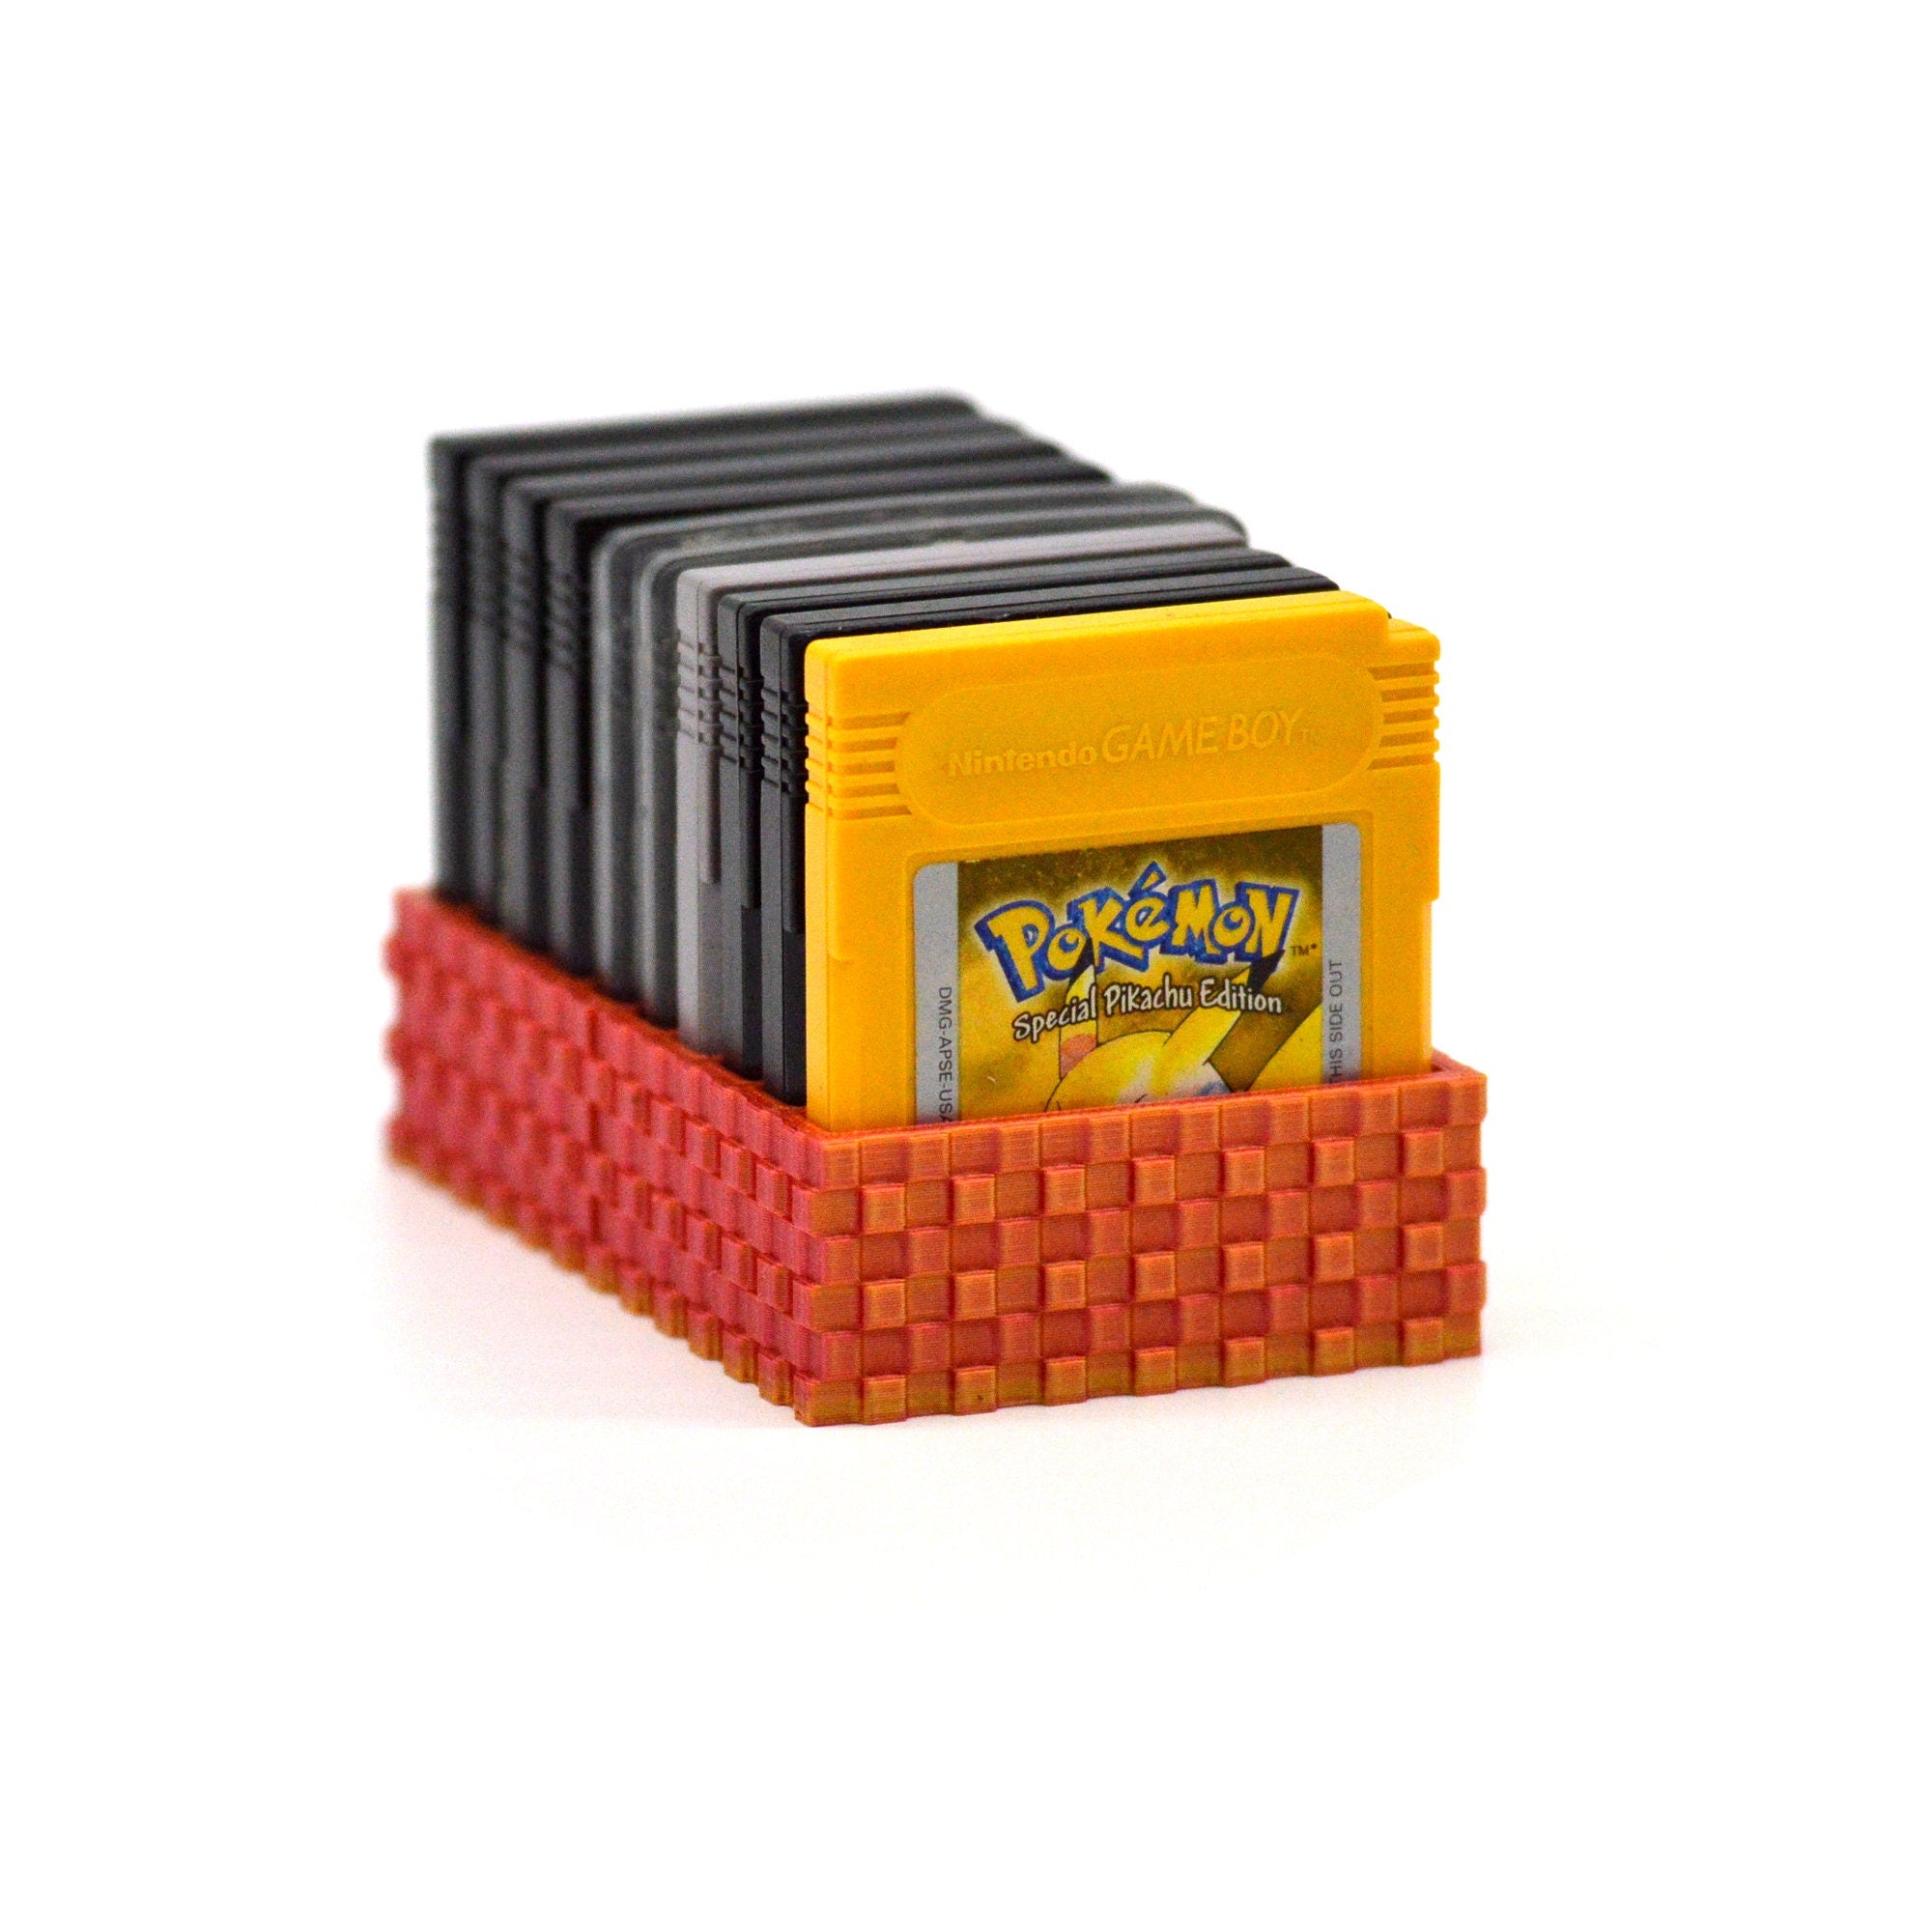 Gameboy Game Storage Tray - 3D Printed Cartridge Holder (10 Games)